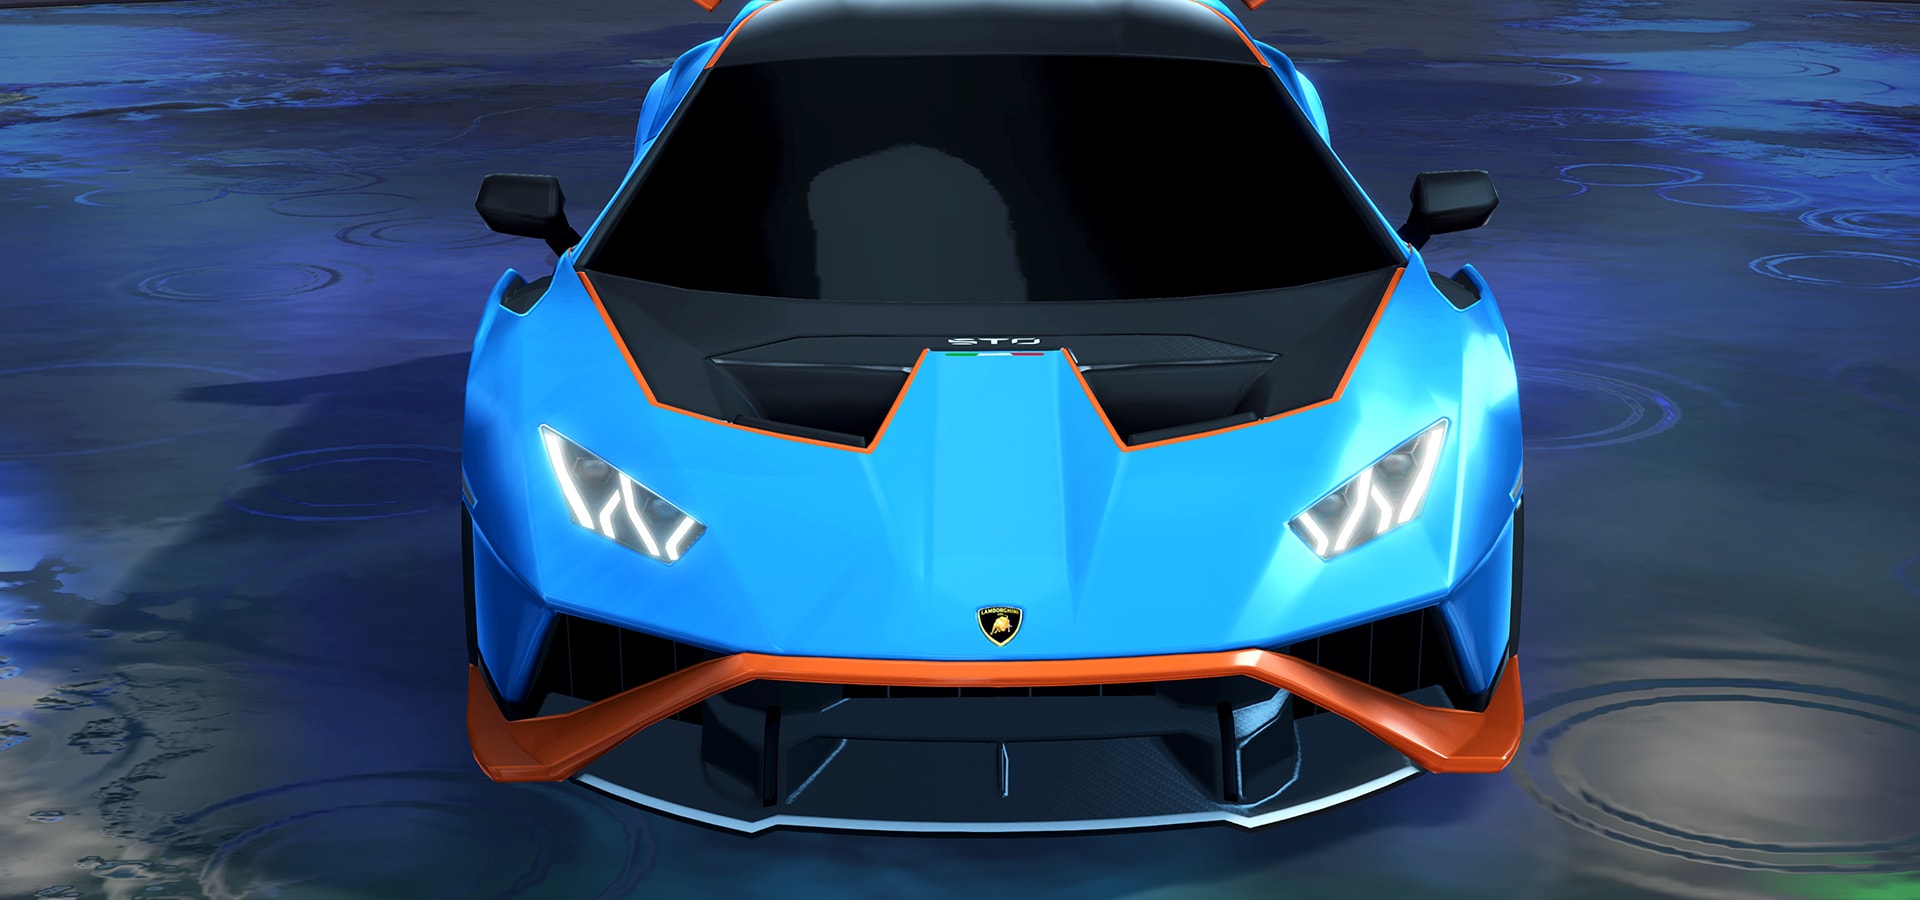 Lamborghini Huracán STO debuts in Rocket League